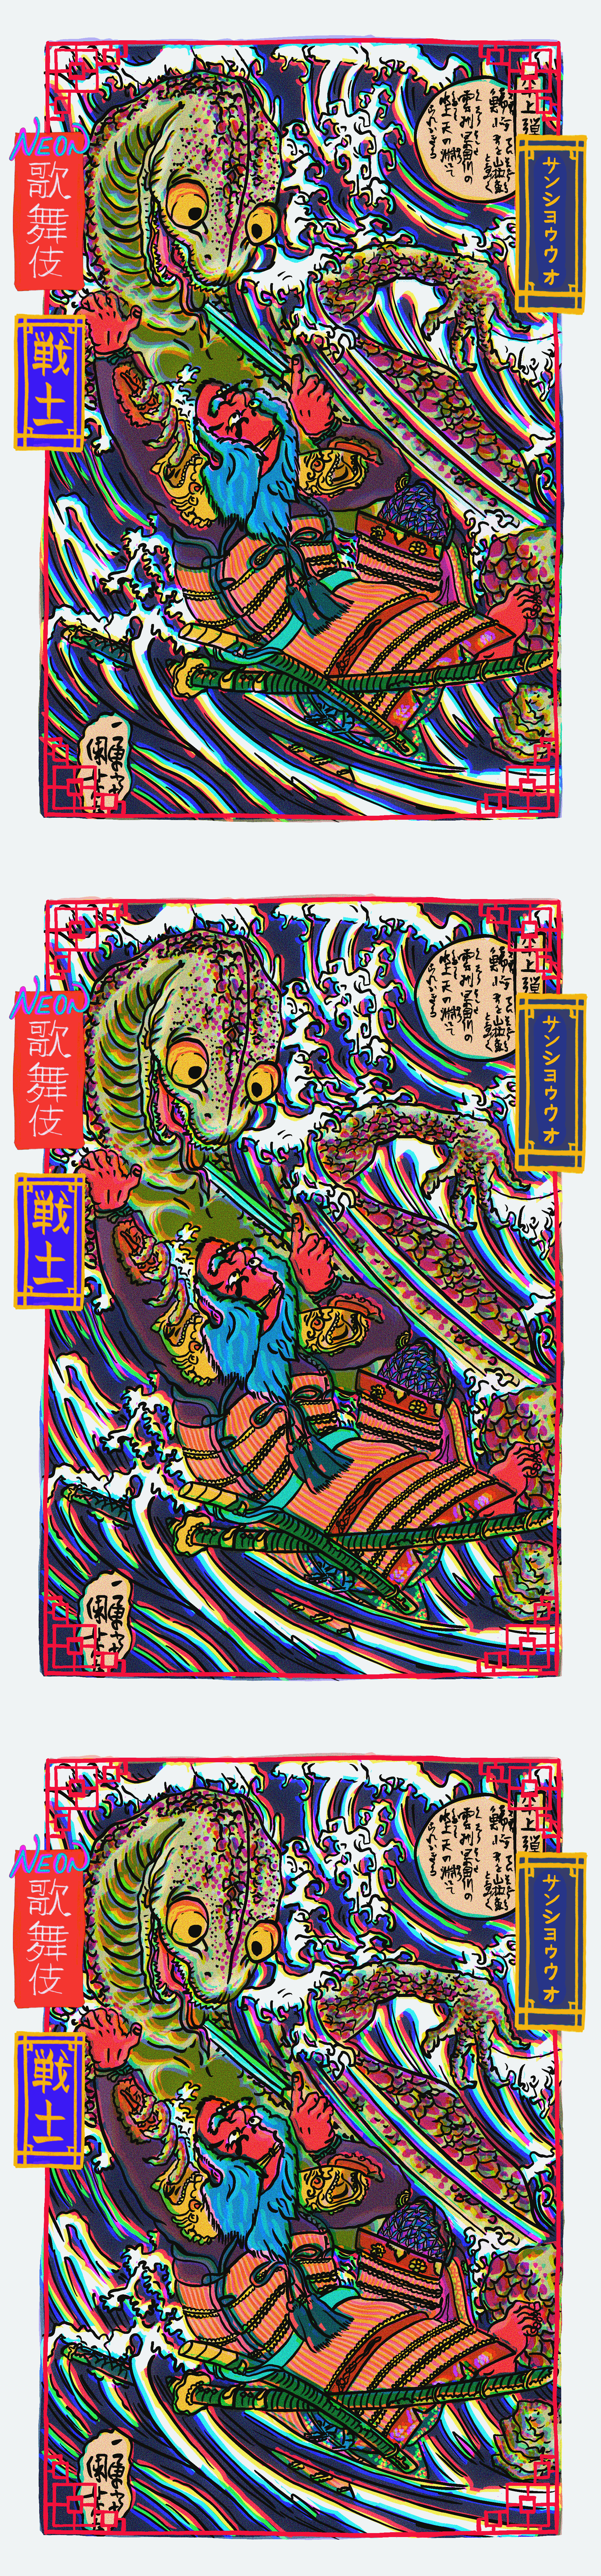 Neon Kabuki Warrior - Salamander